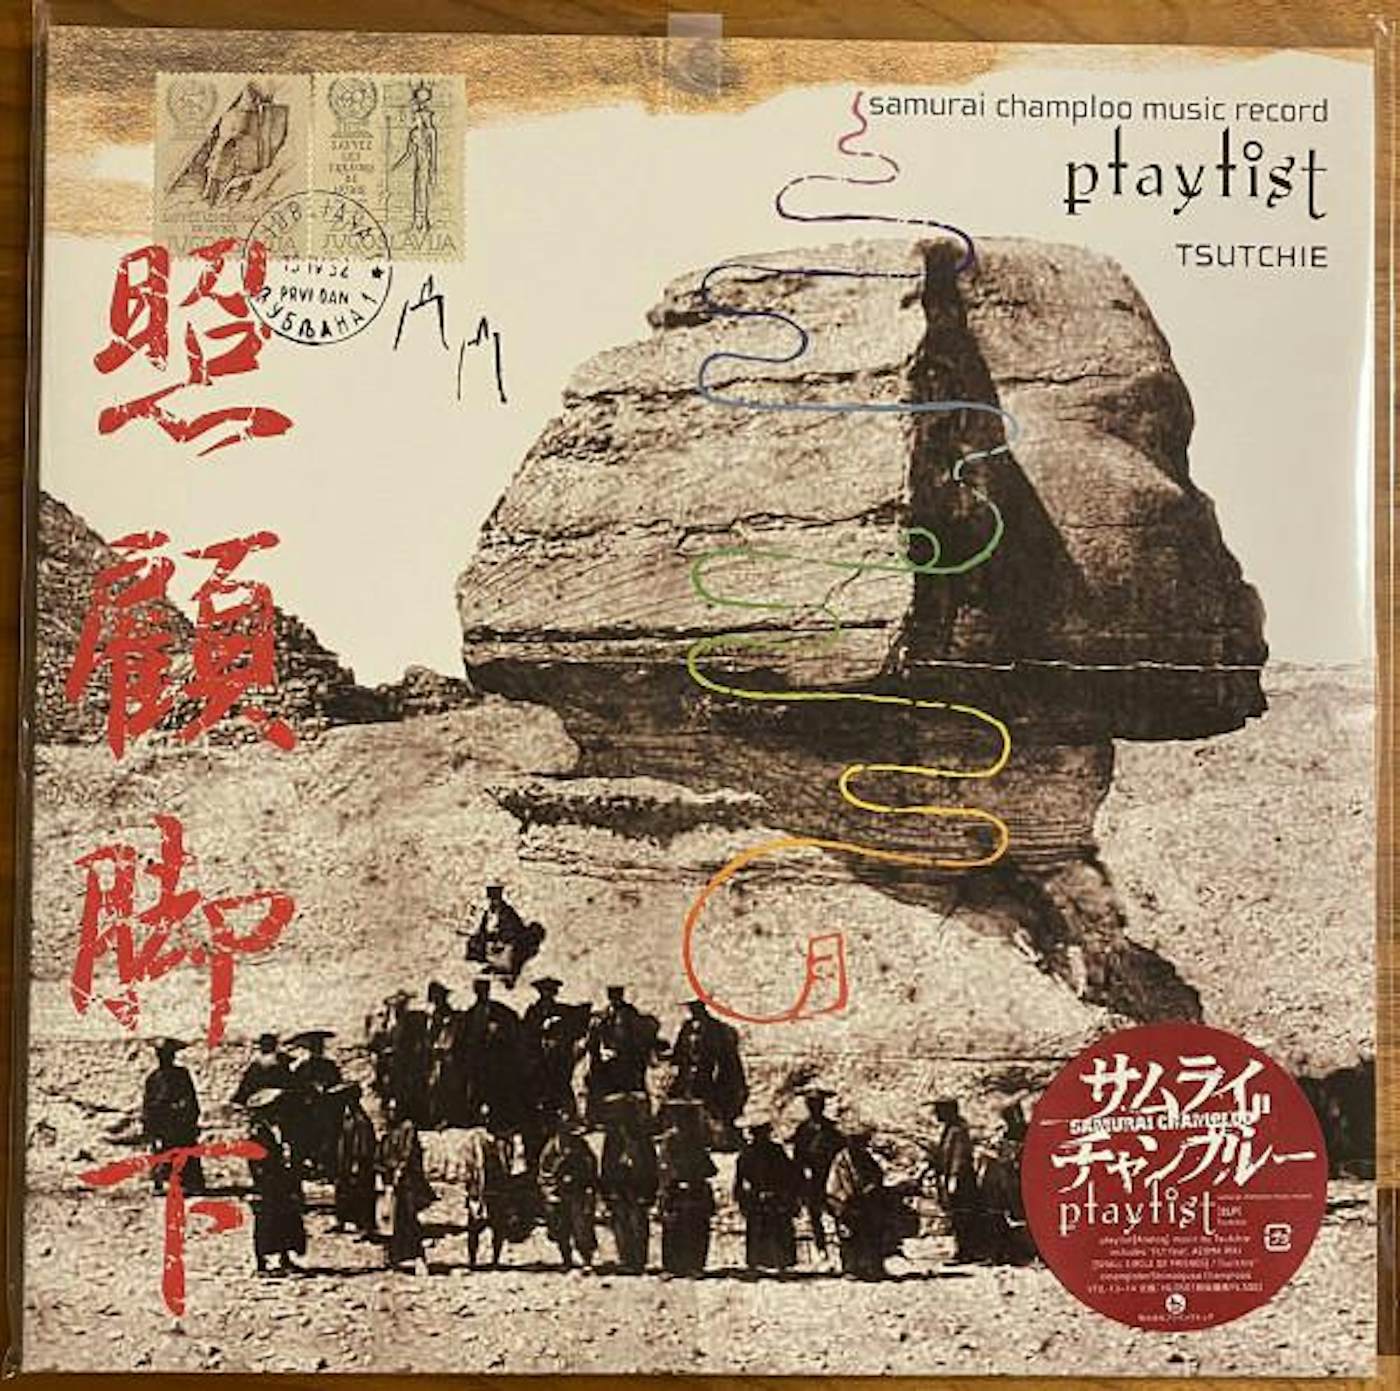 TSUTCHIE SAMURAI CHAMPLOO MUSIC RECORD: PLAYLIST - Original